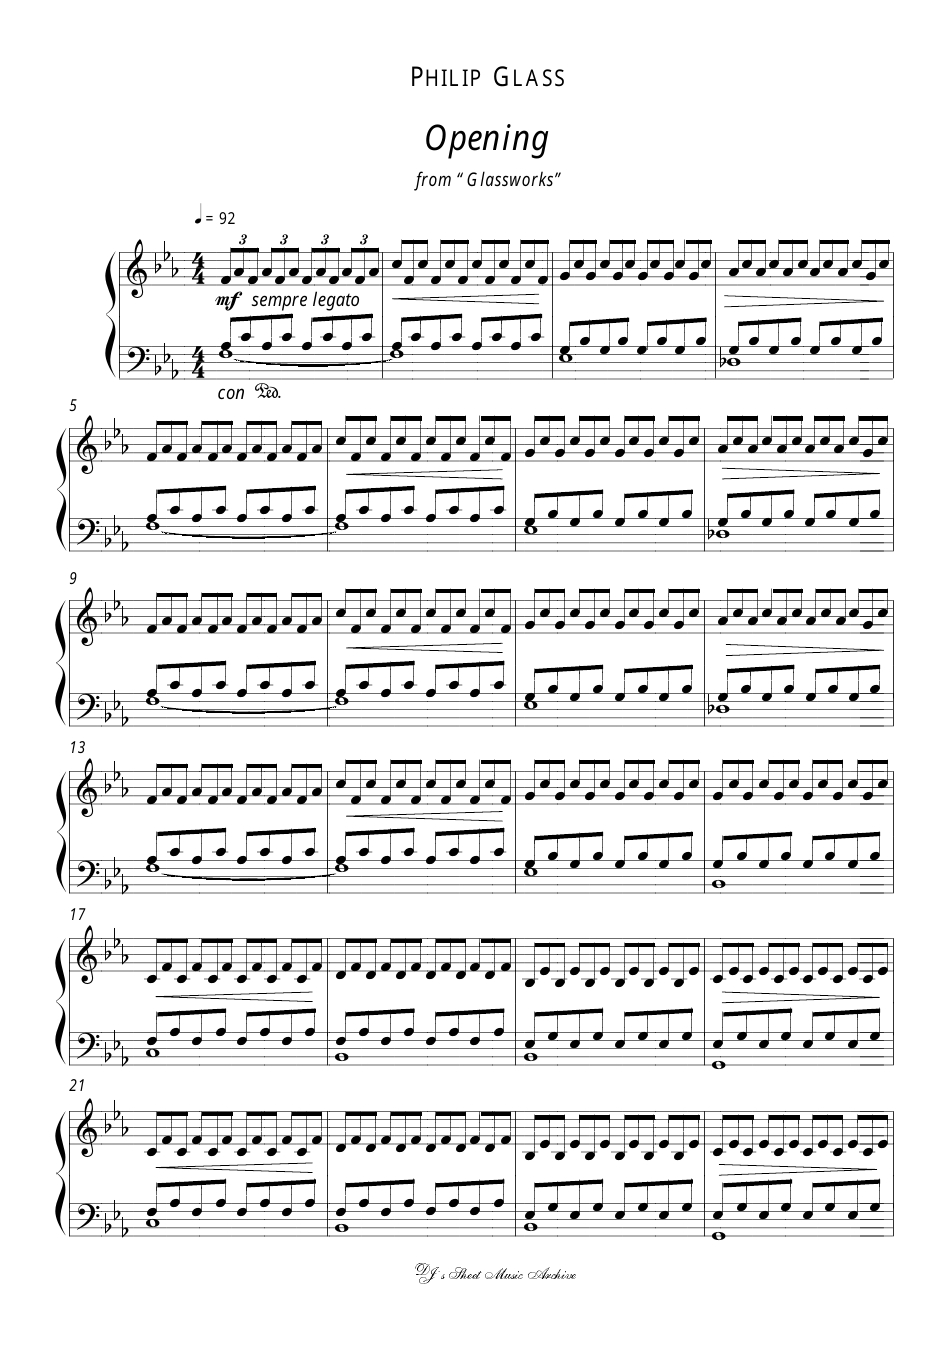 Sheet music - Philip Glass - Opening ("Glassworks" OST) piano sheet music